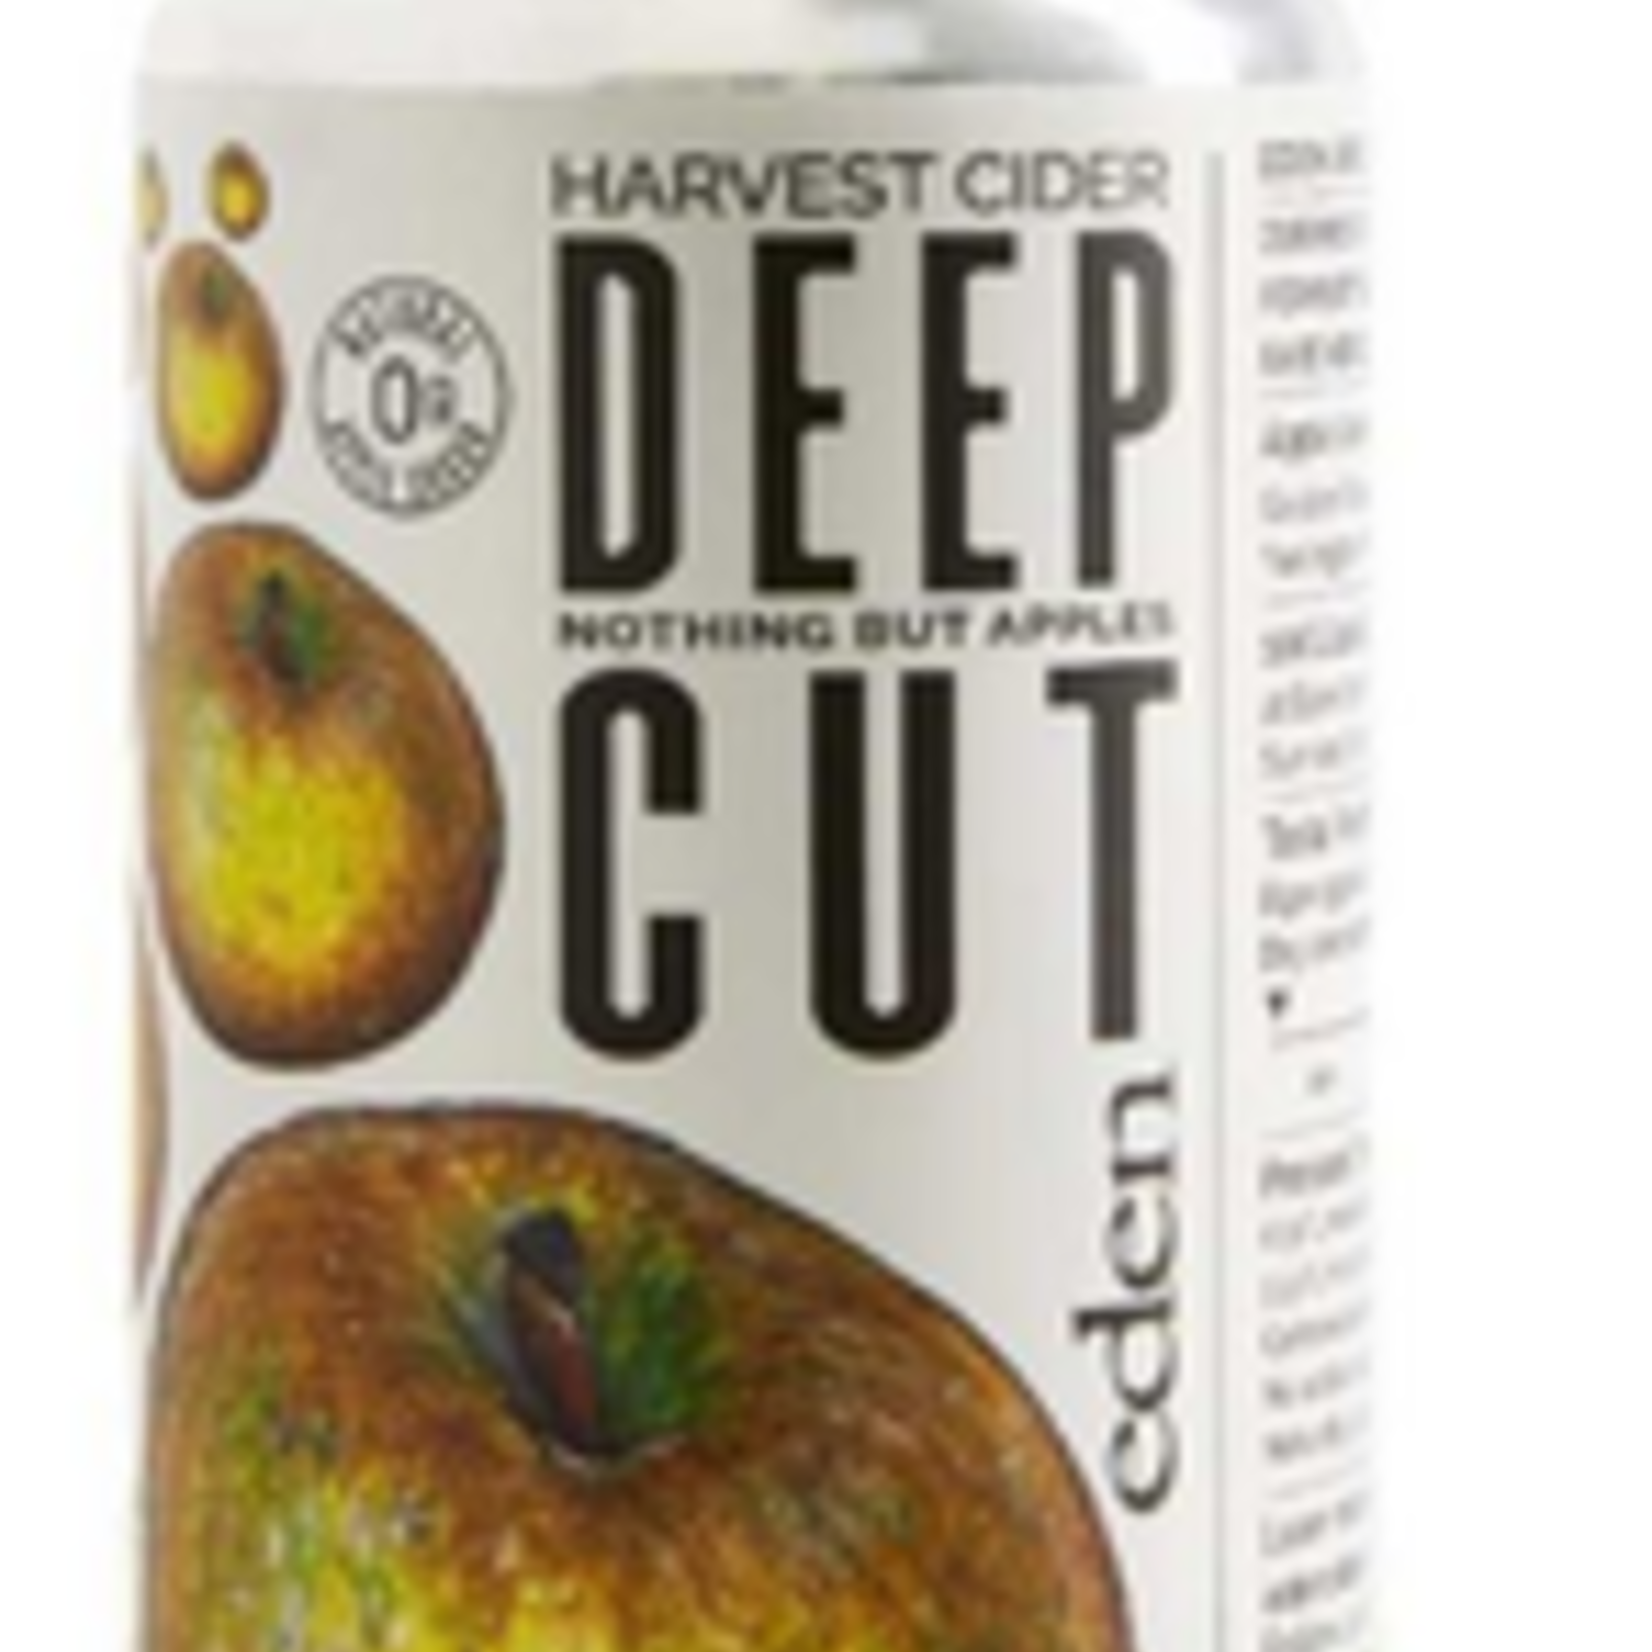 USA Eden Deep Cut Harvest Cider 4pk